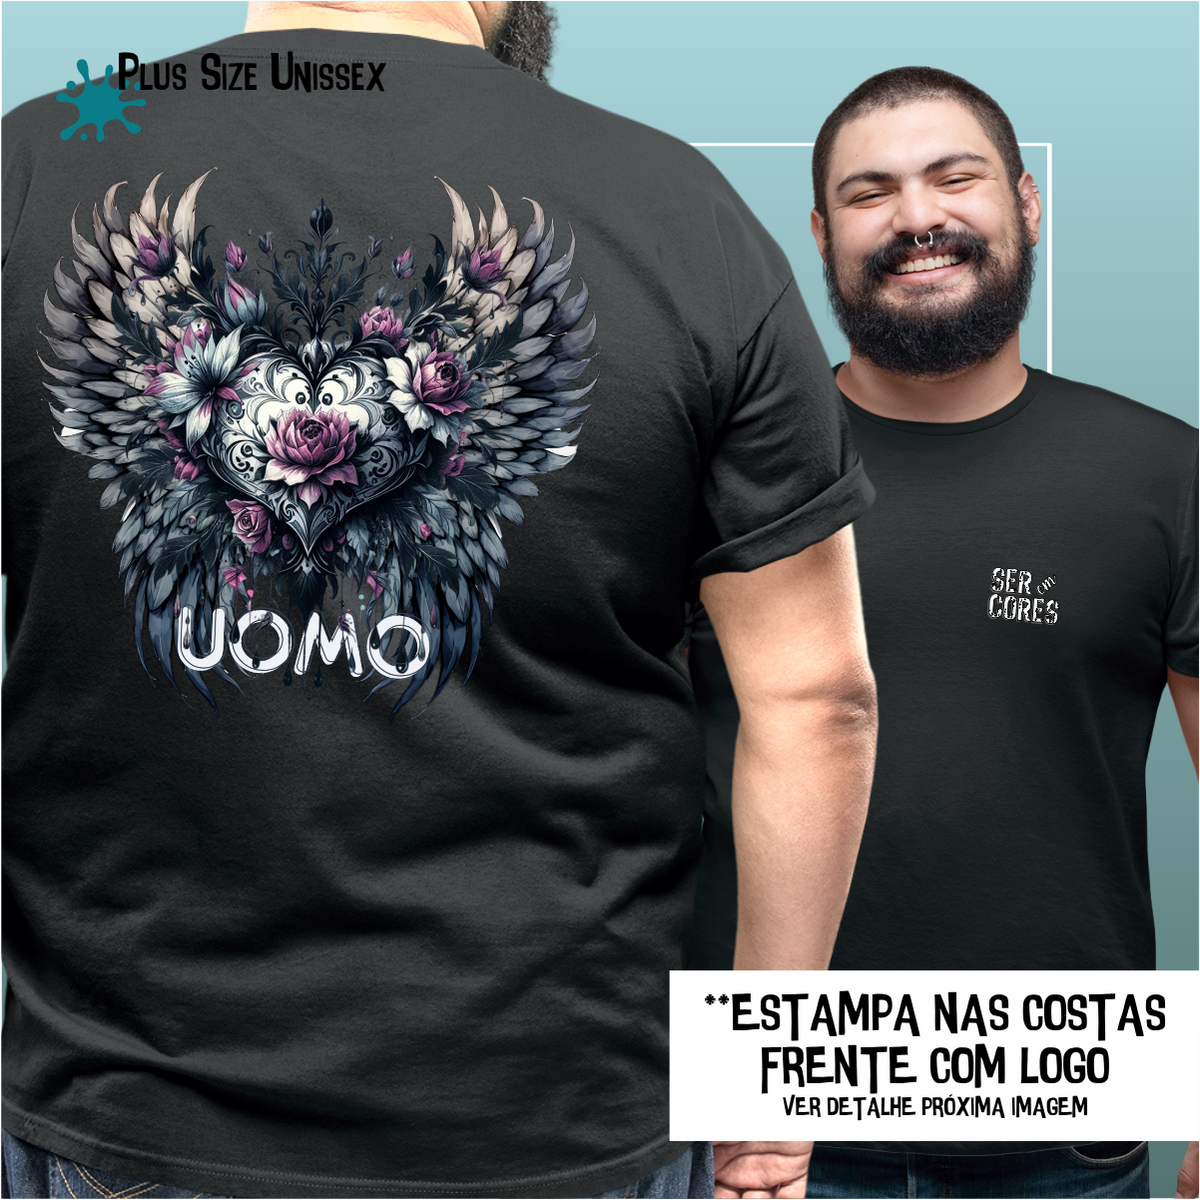 Nome do produto: UOMO e LOGO (frente e costas plus size) Seremcores